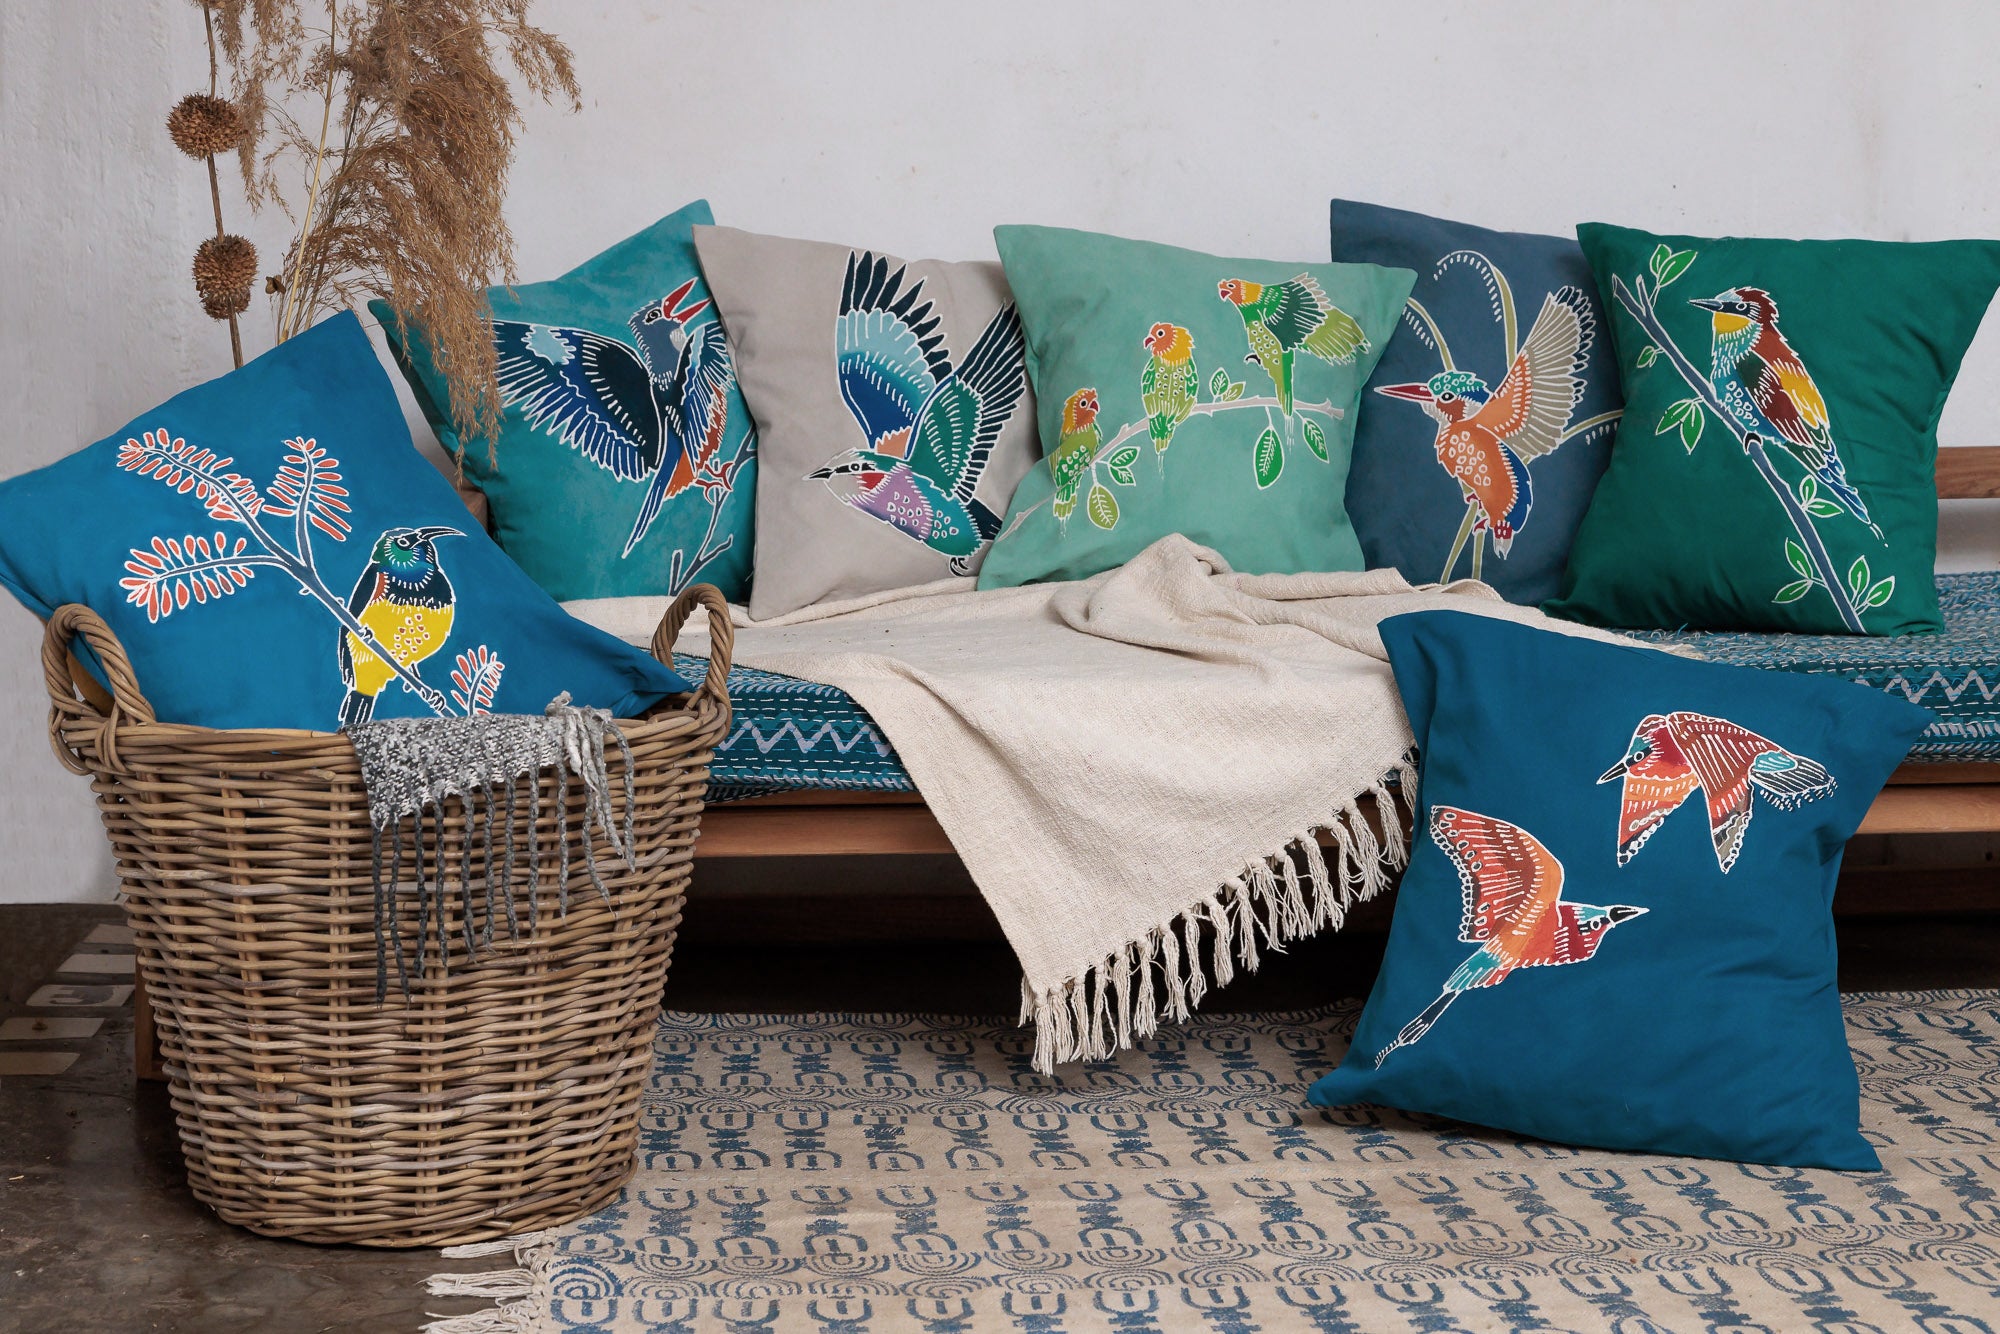 Papiko Bird Collection, inspired by birds, home decor by TRIBAL TEXTILES